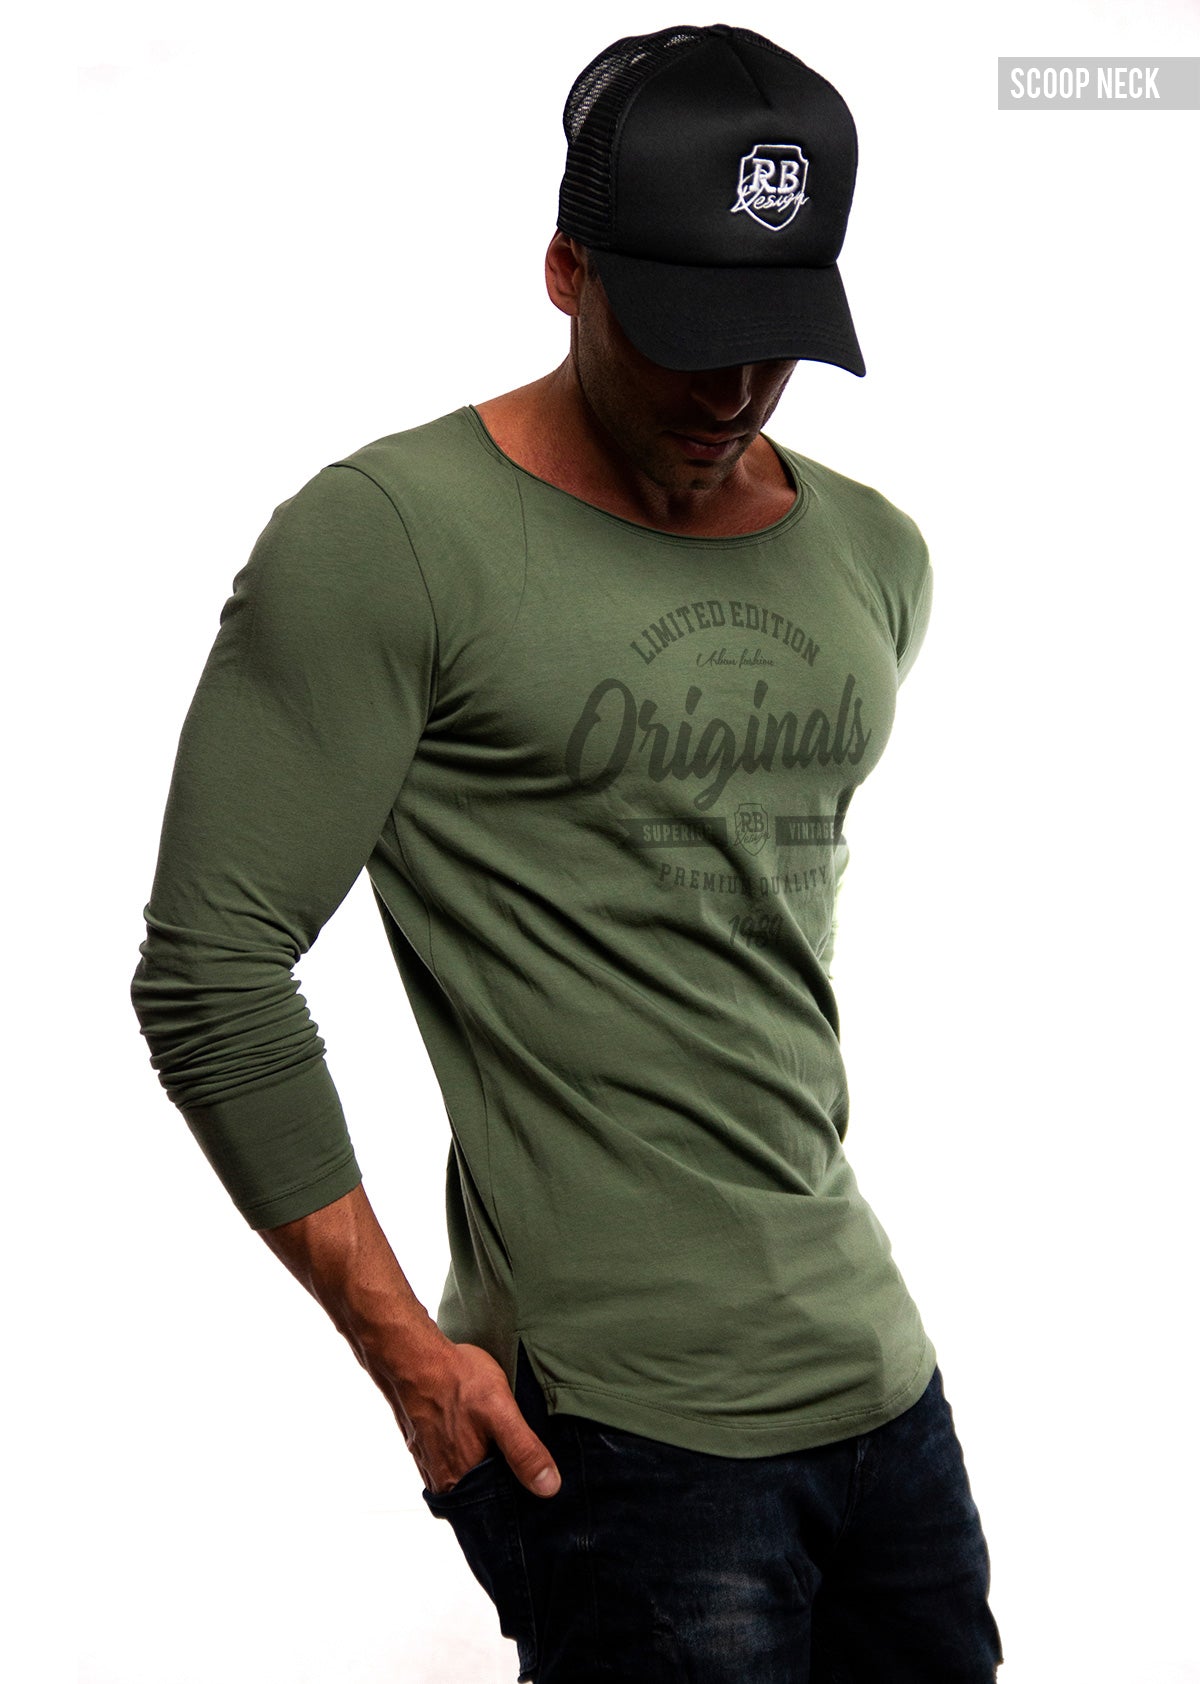 Mens Long Sleeve T-shirt "Originals" MD961